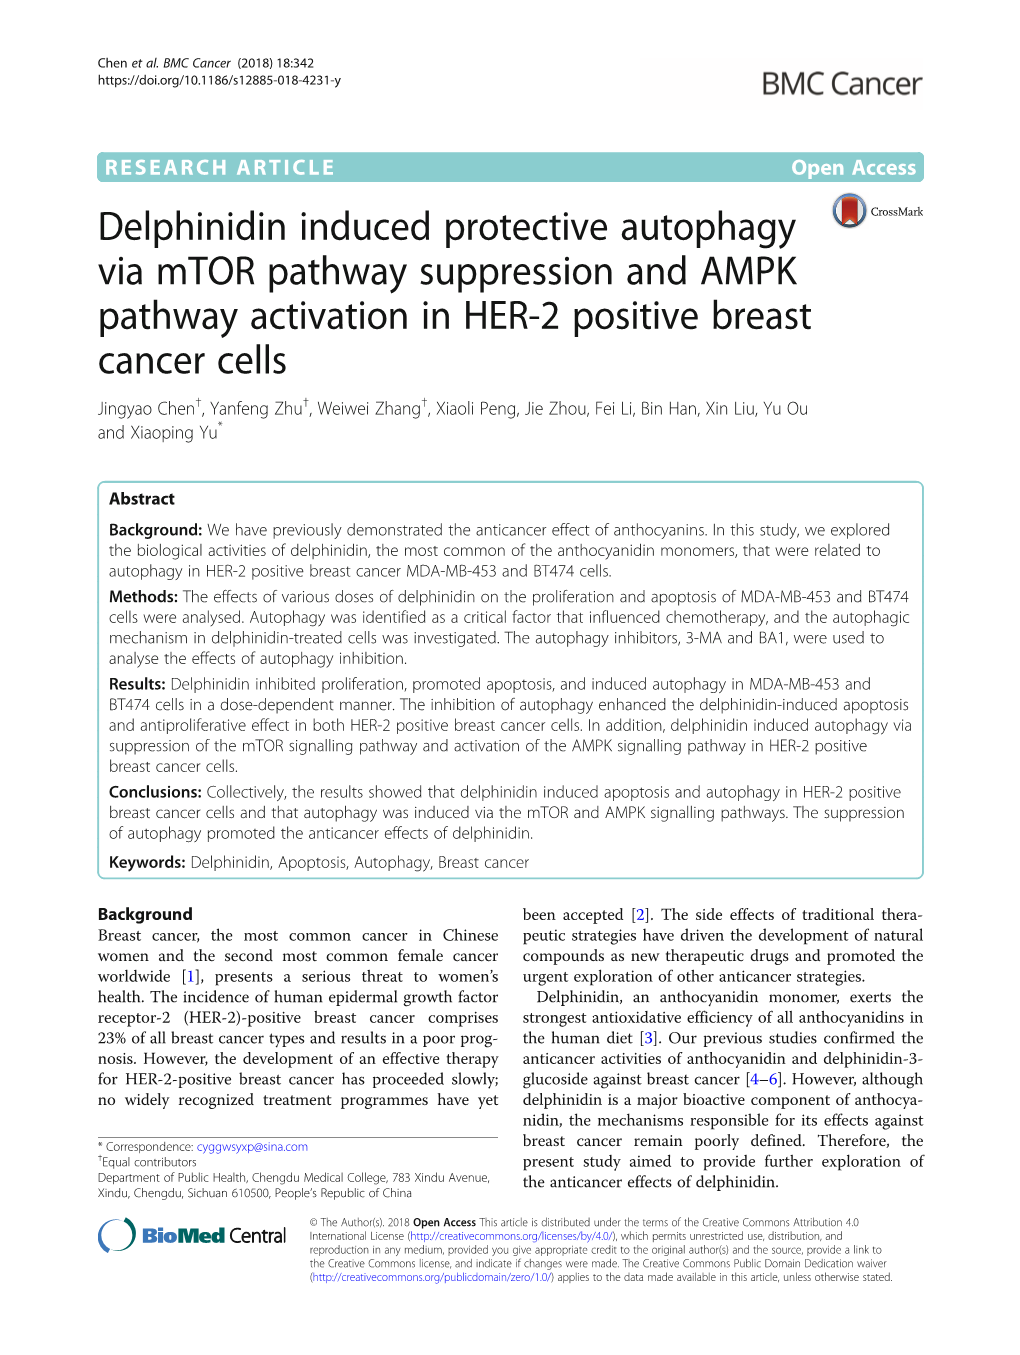 Delphinidin Induced Protective Autophagy Via Mtor Pathway